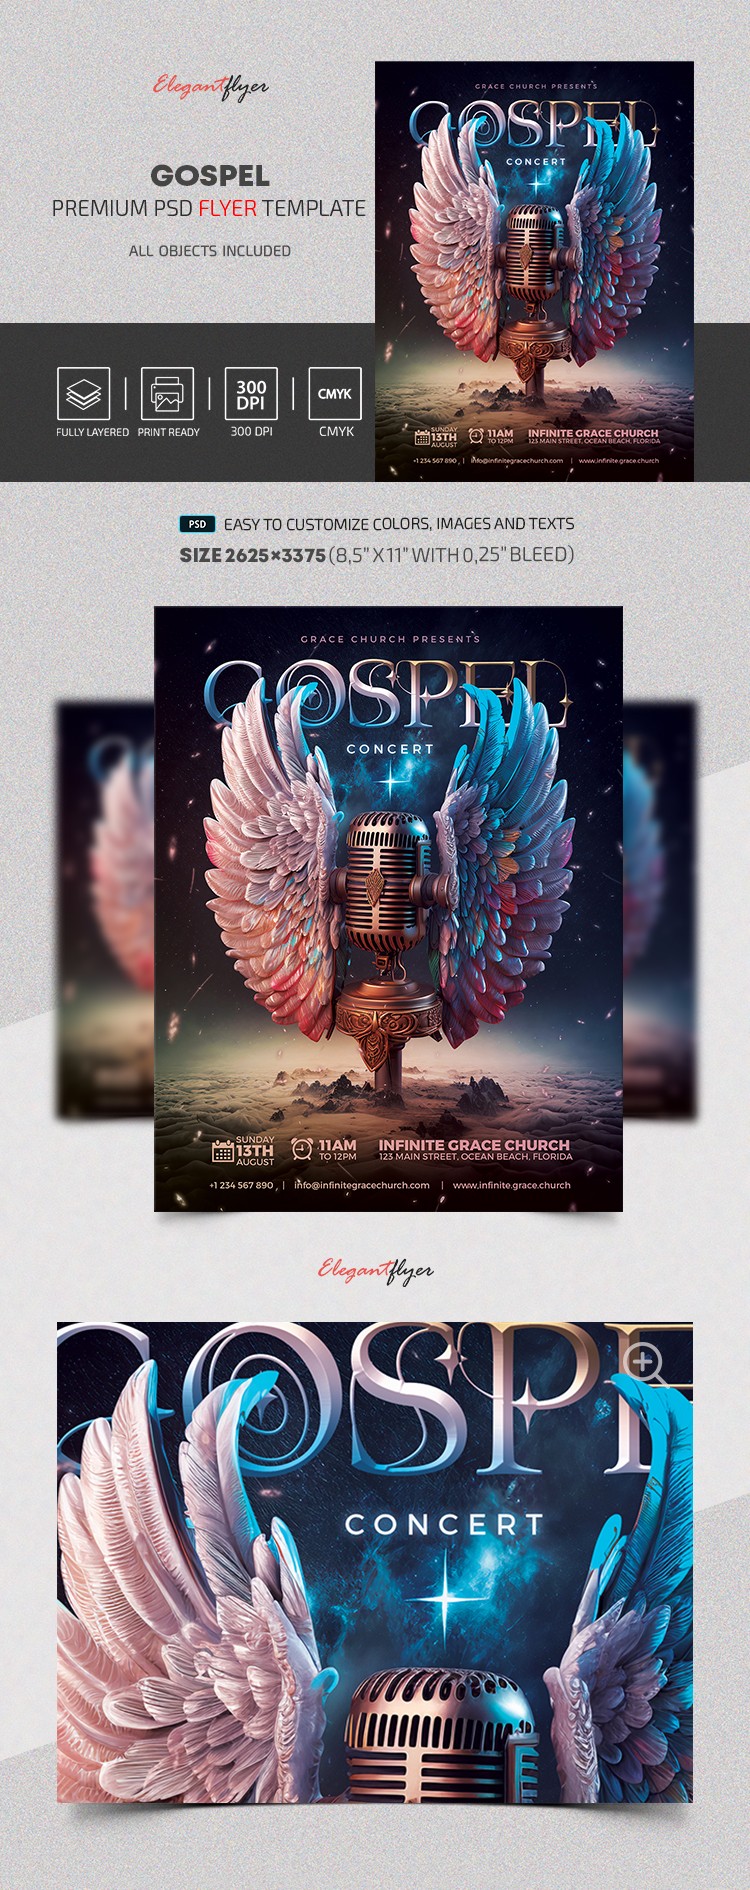 Gospel Flyer by ElegantFlyer